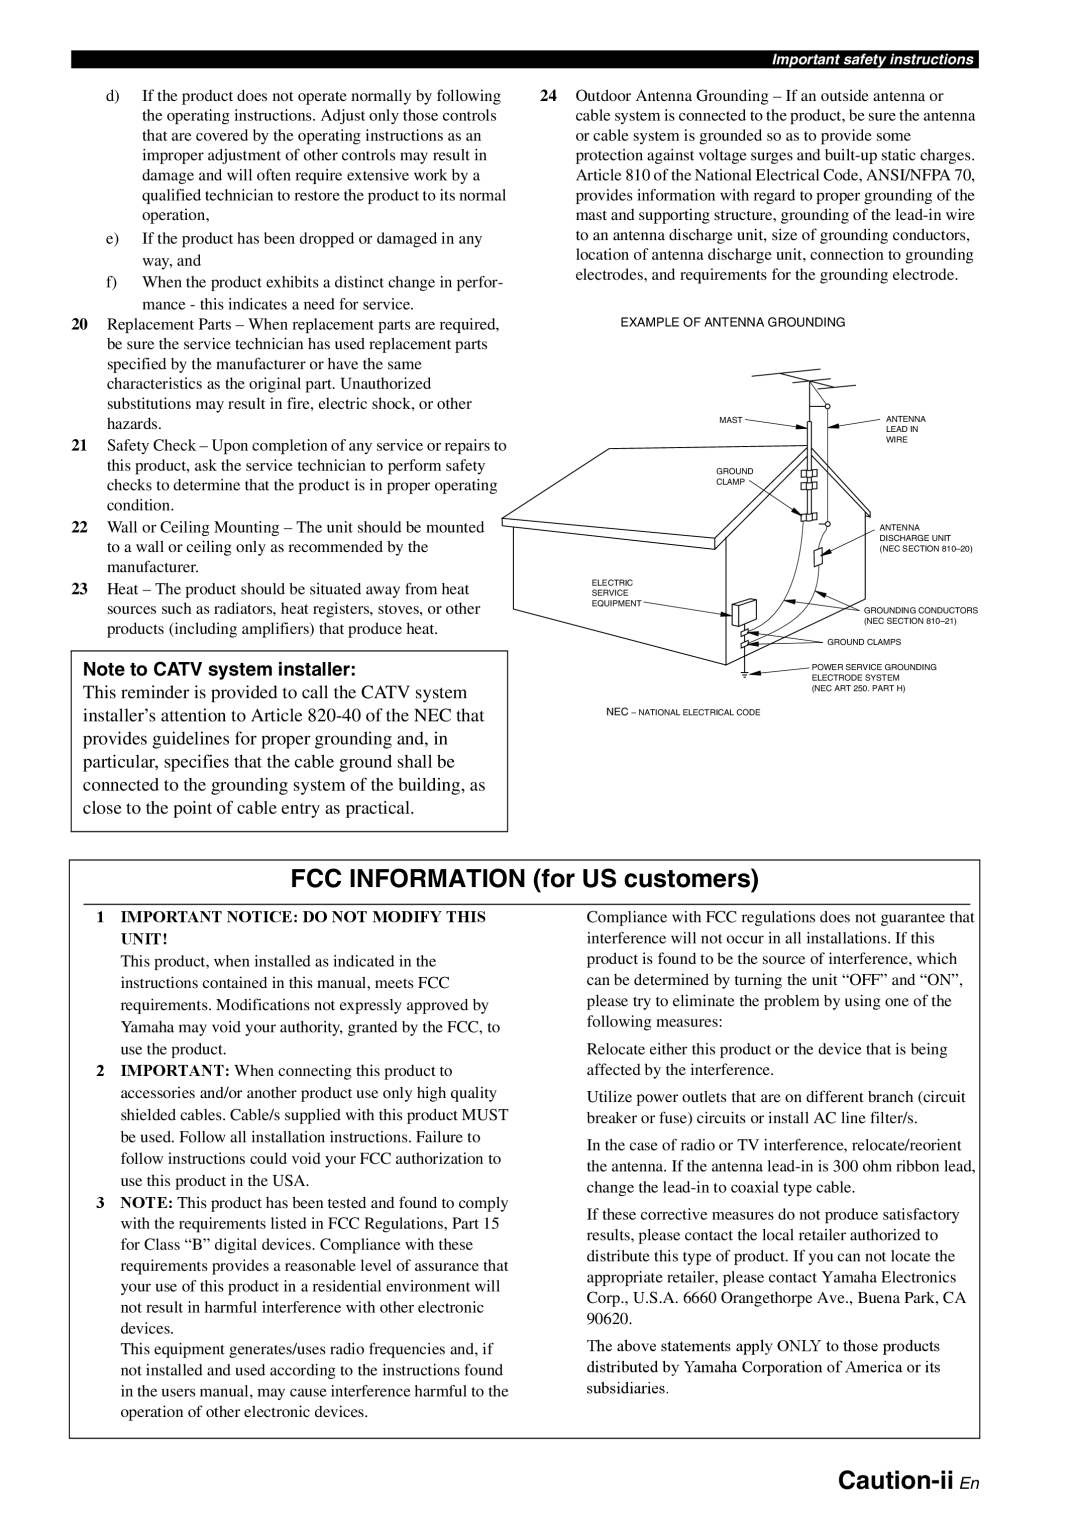 Yamaha HTR-6080 owner manual FCC INFORMATION for US customers, Caution-ii En, Note to CATV system installer 